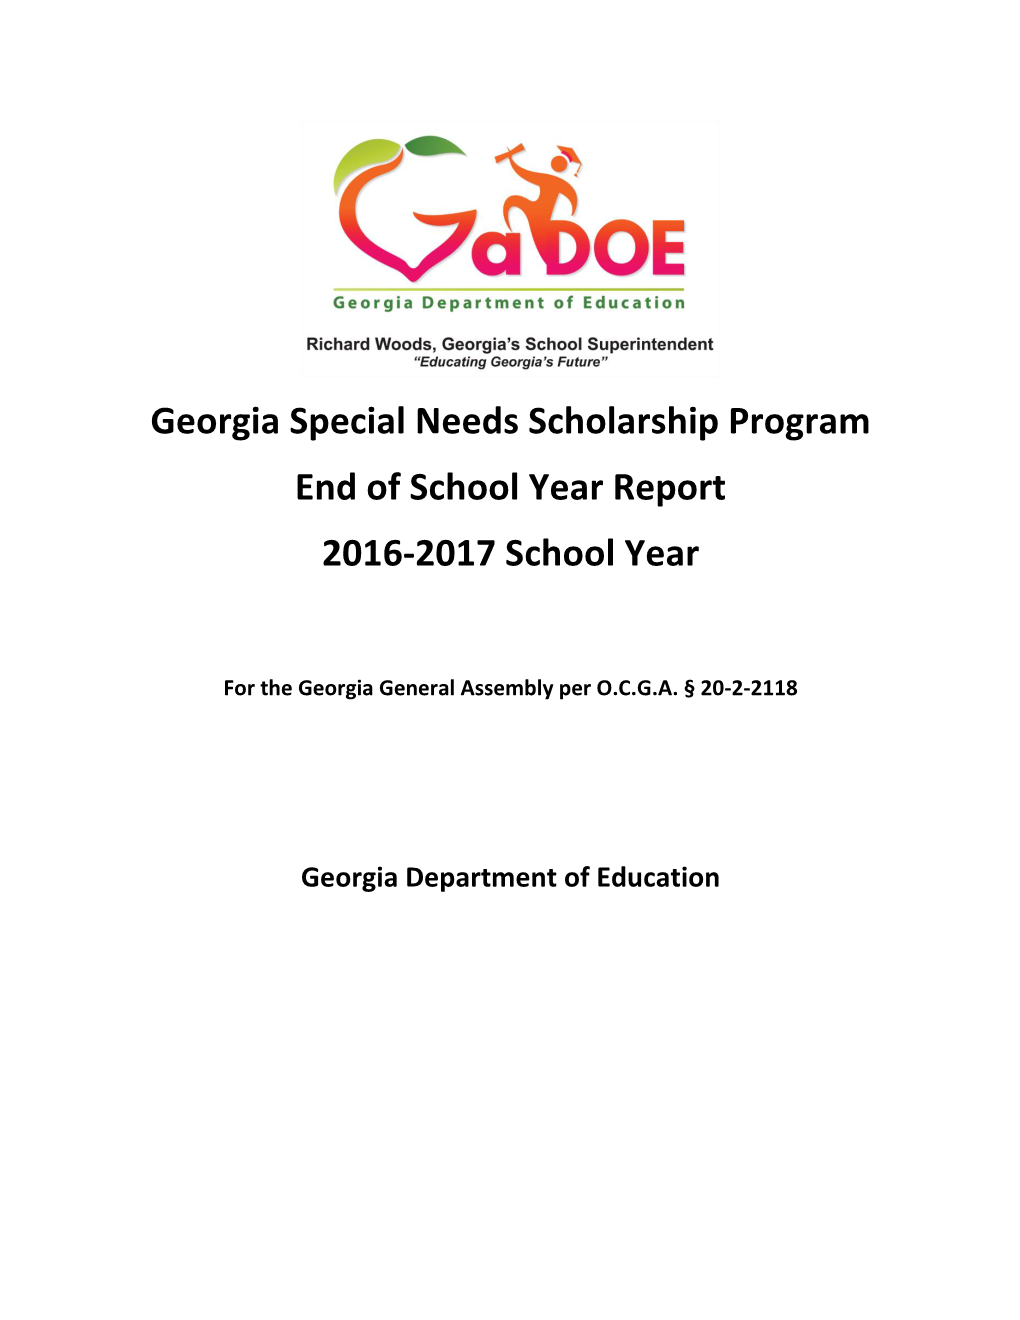 Georgia Special Needs Scholarship Program End of School Year Report 2016-2017 School Year